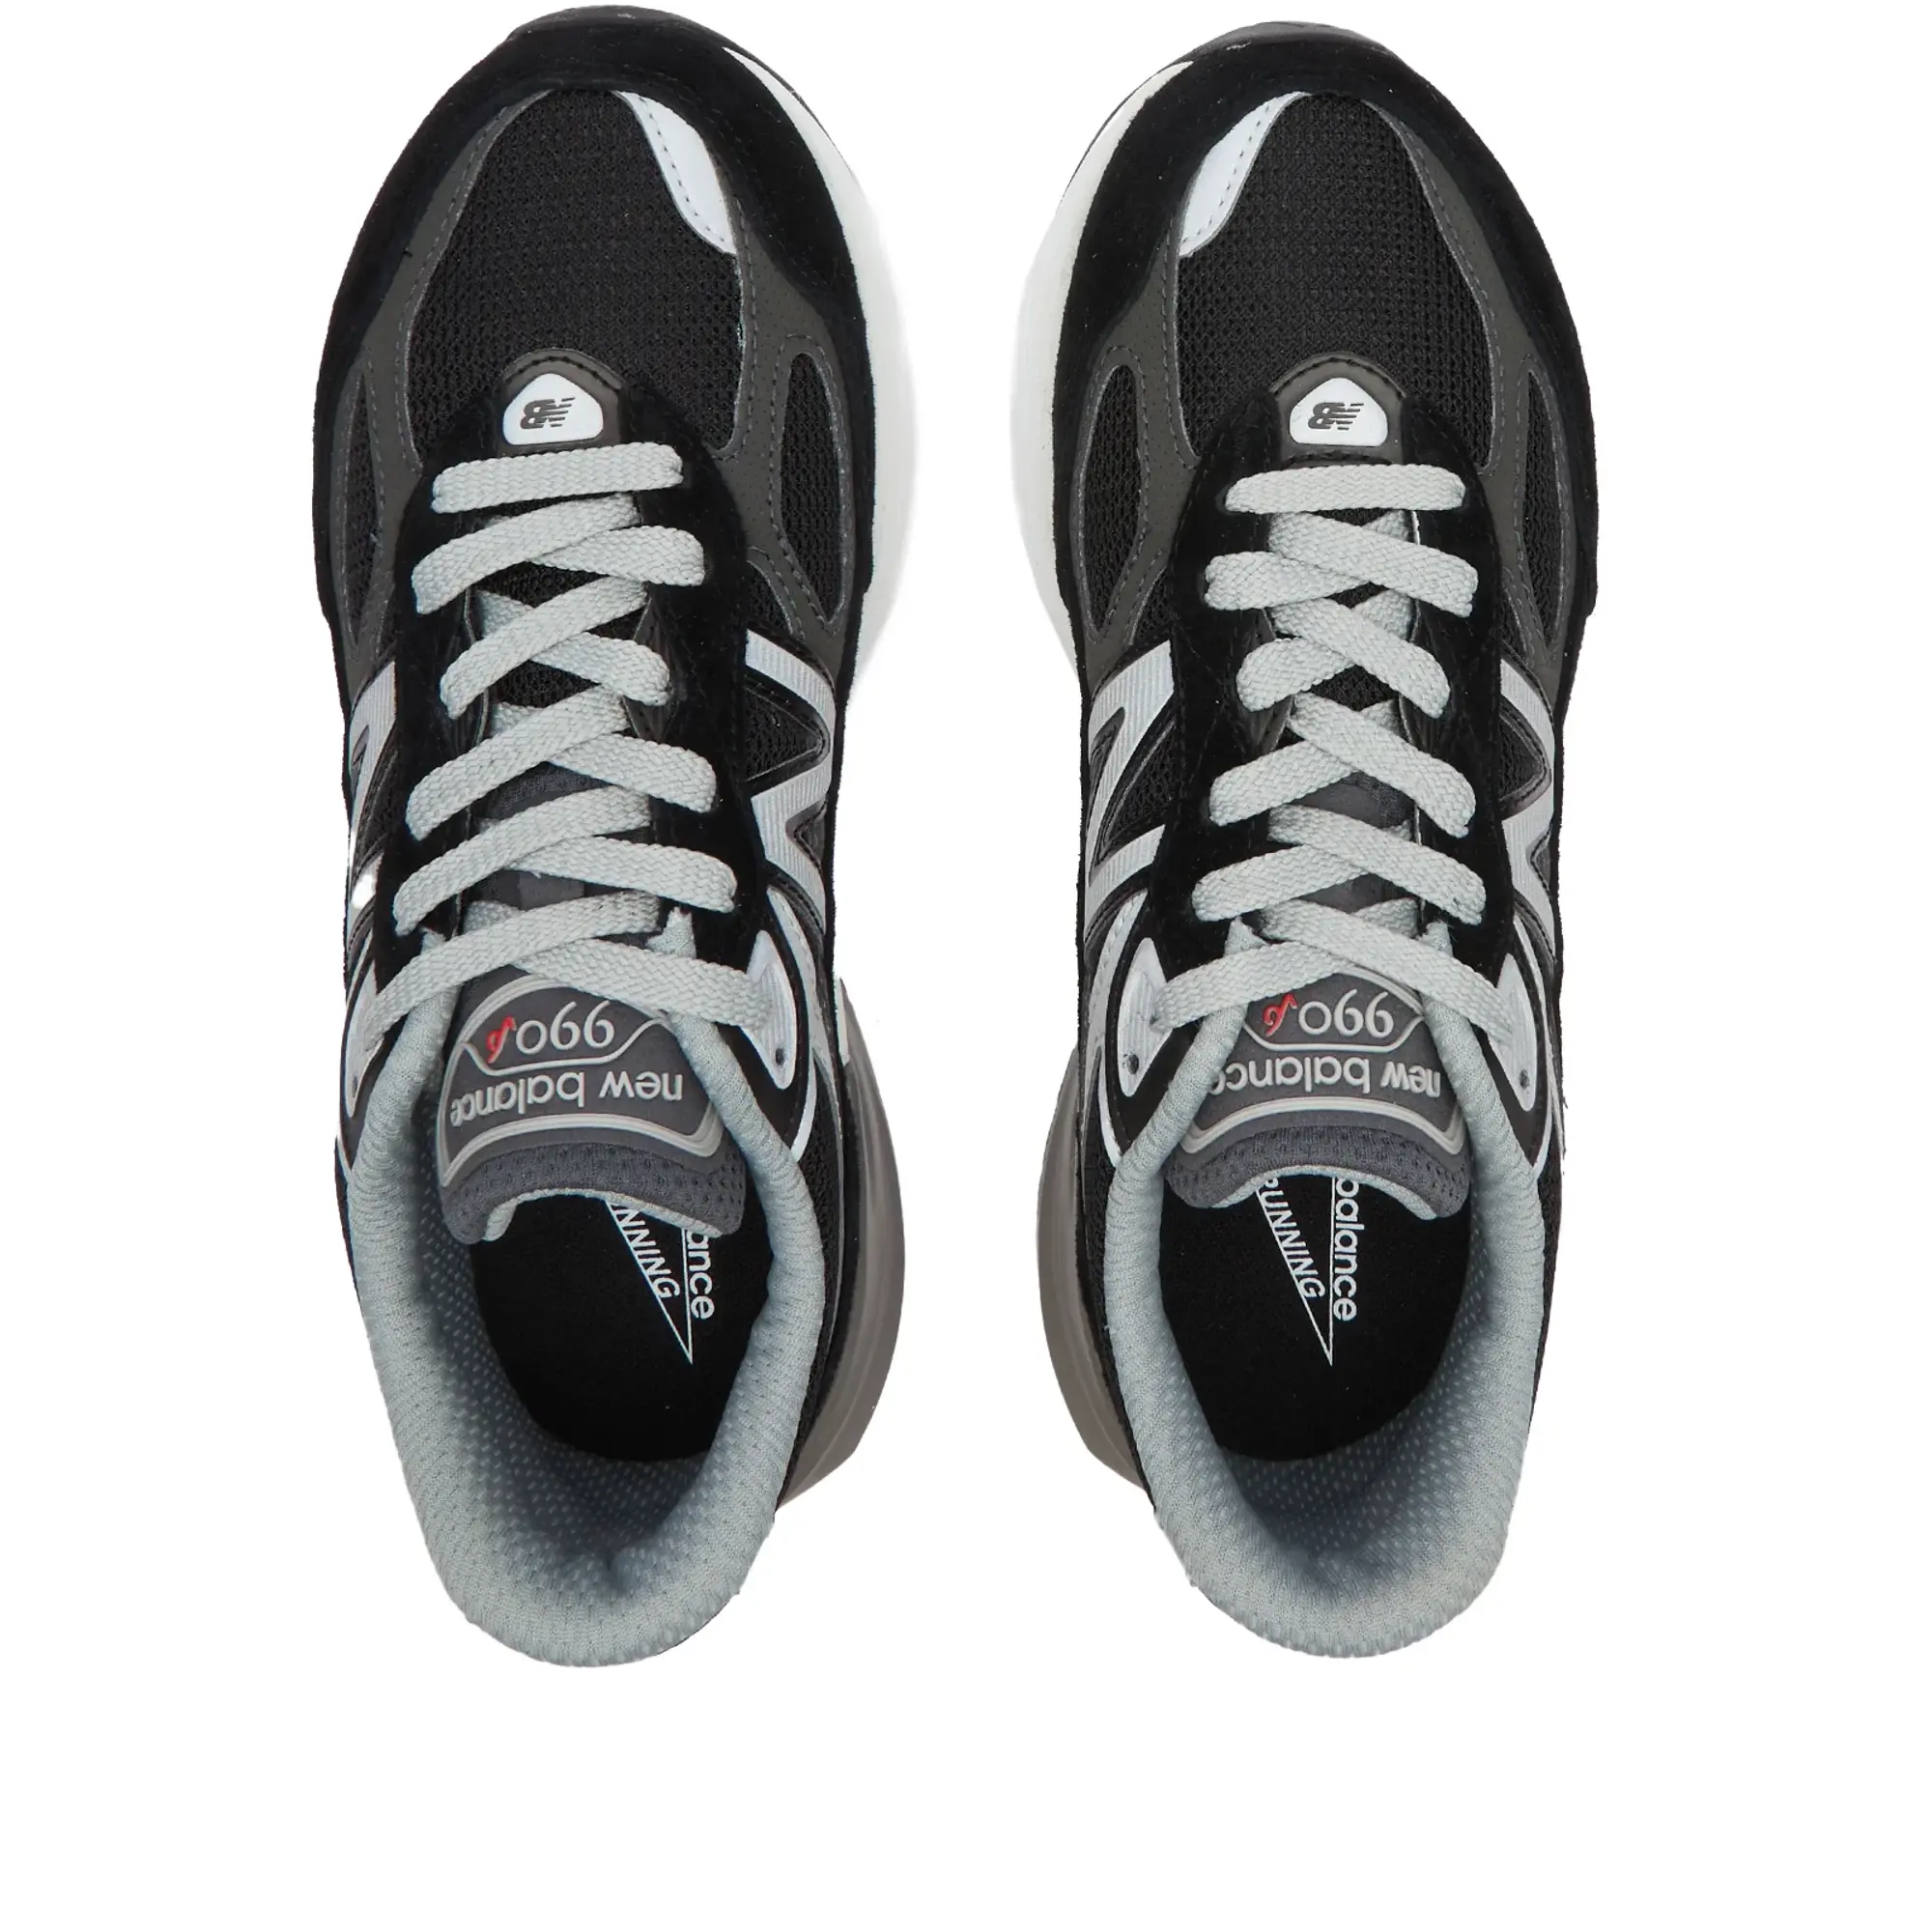 New Balance 990 Women Sneakers|Lowtop Black | GC990BK6 | FOOTY.COM